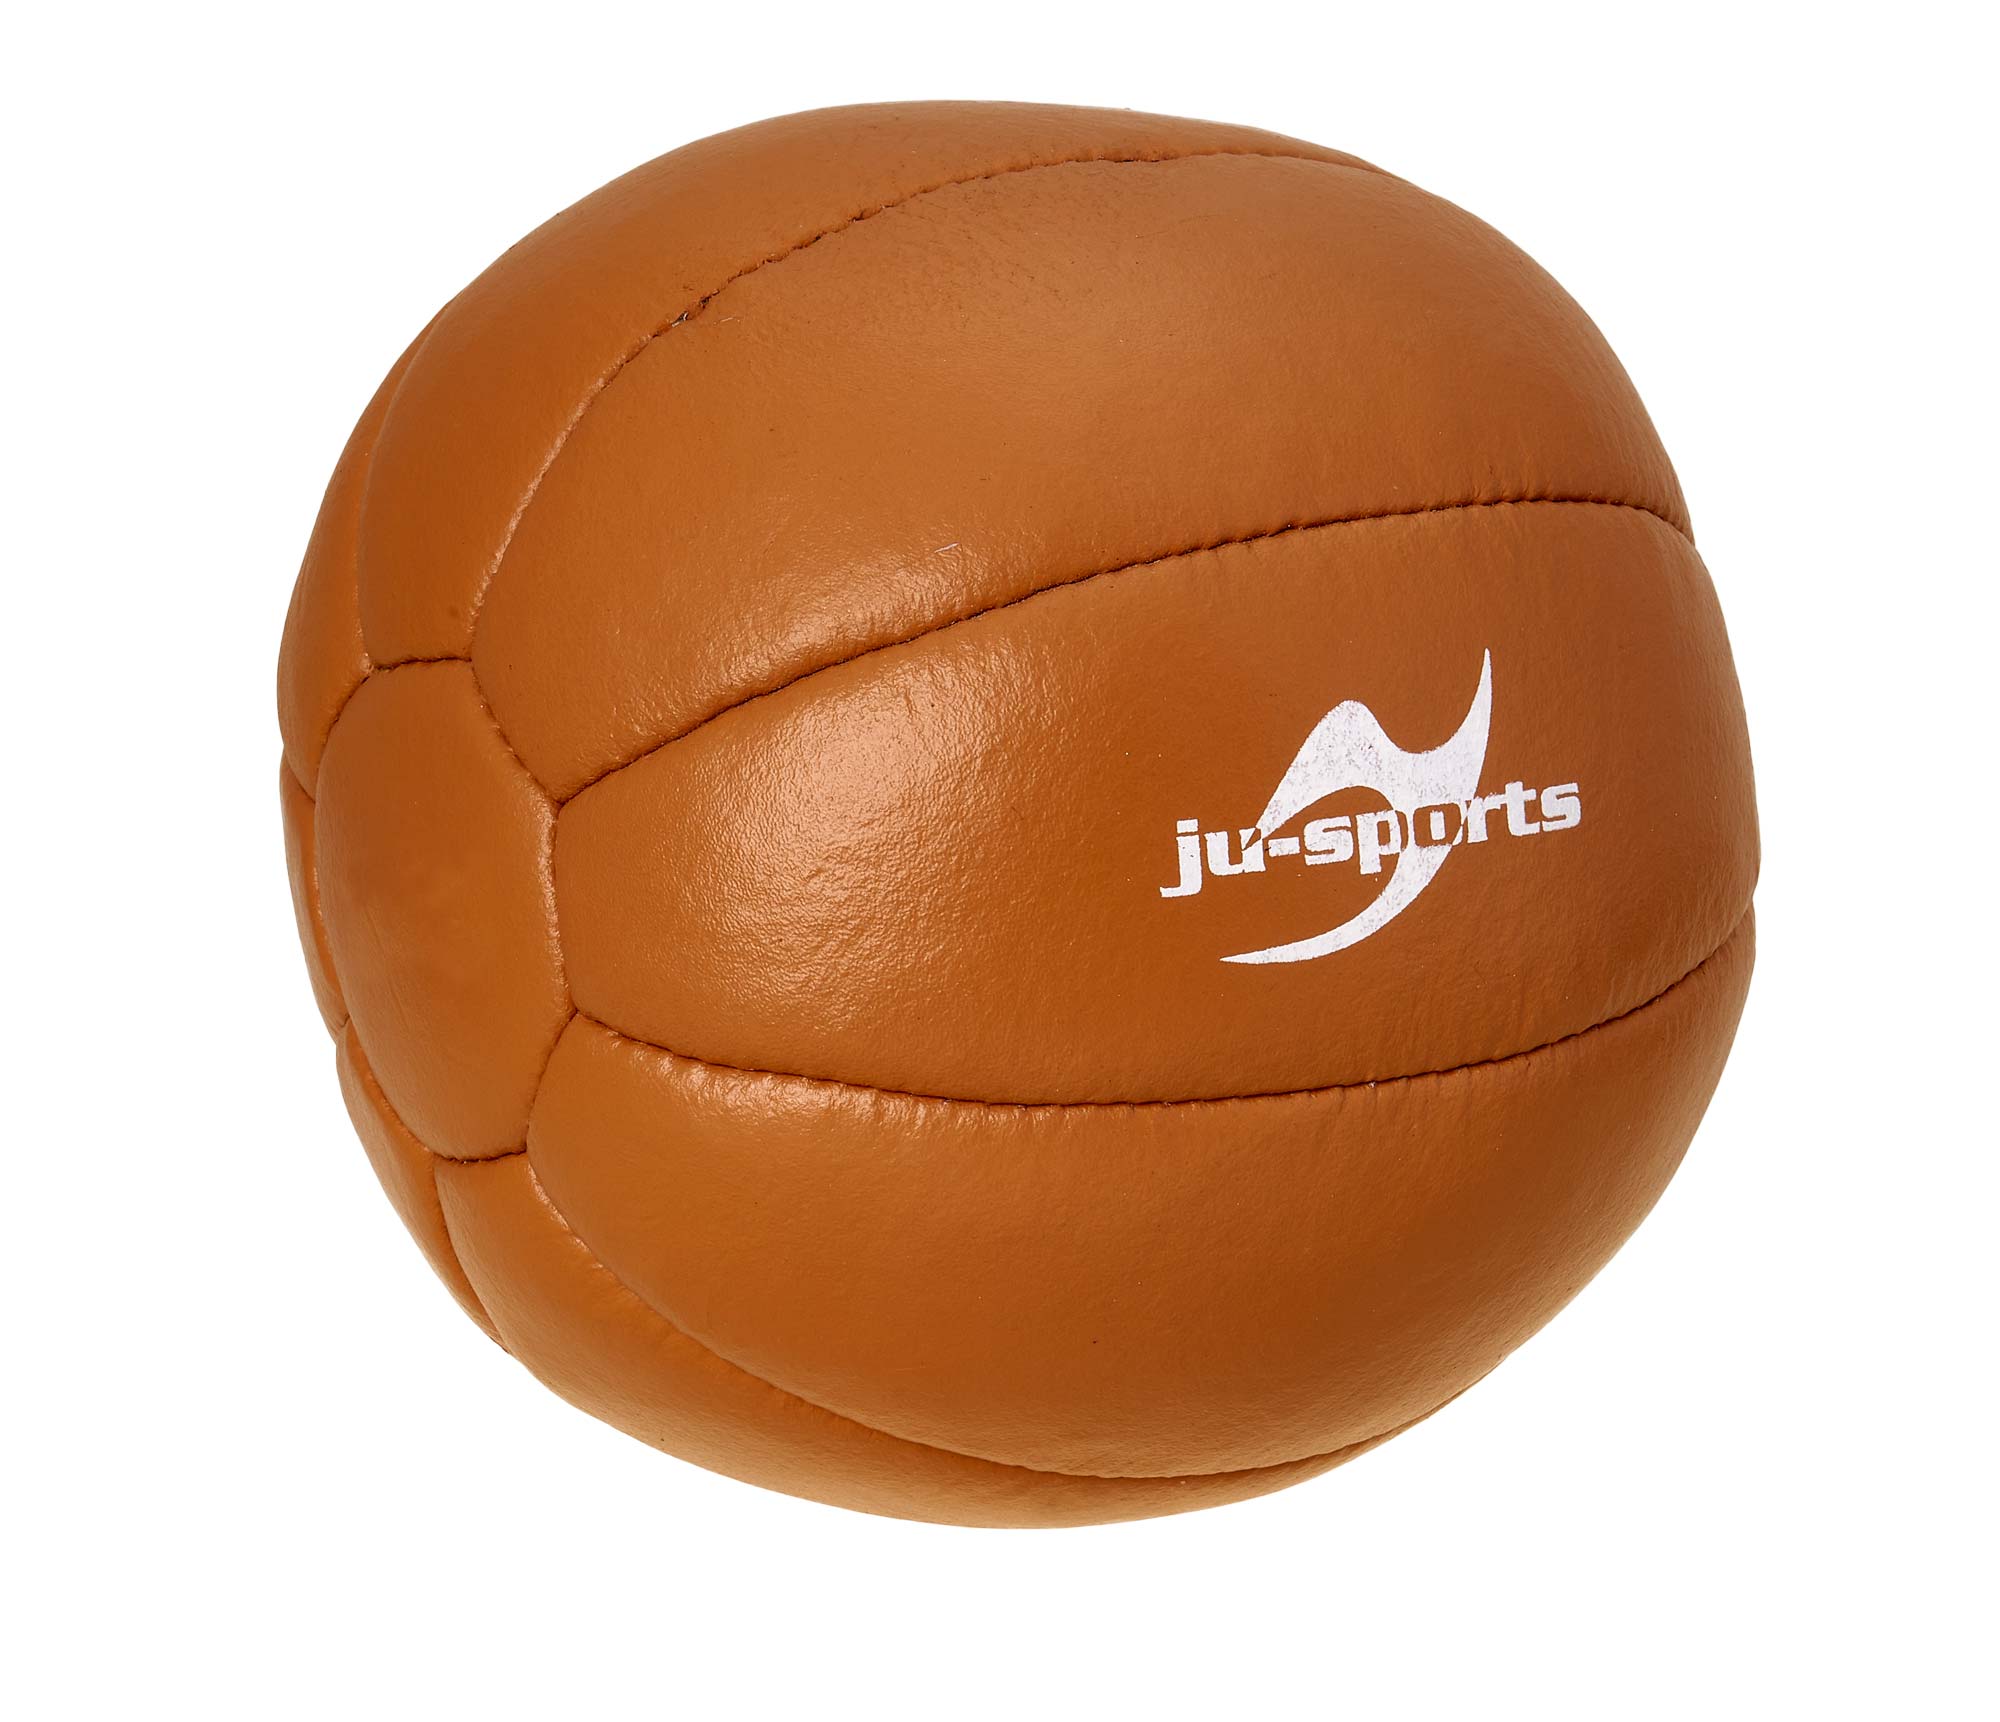 Ju-Sports Medicine Ball Leather